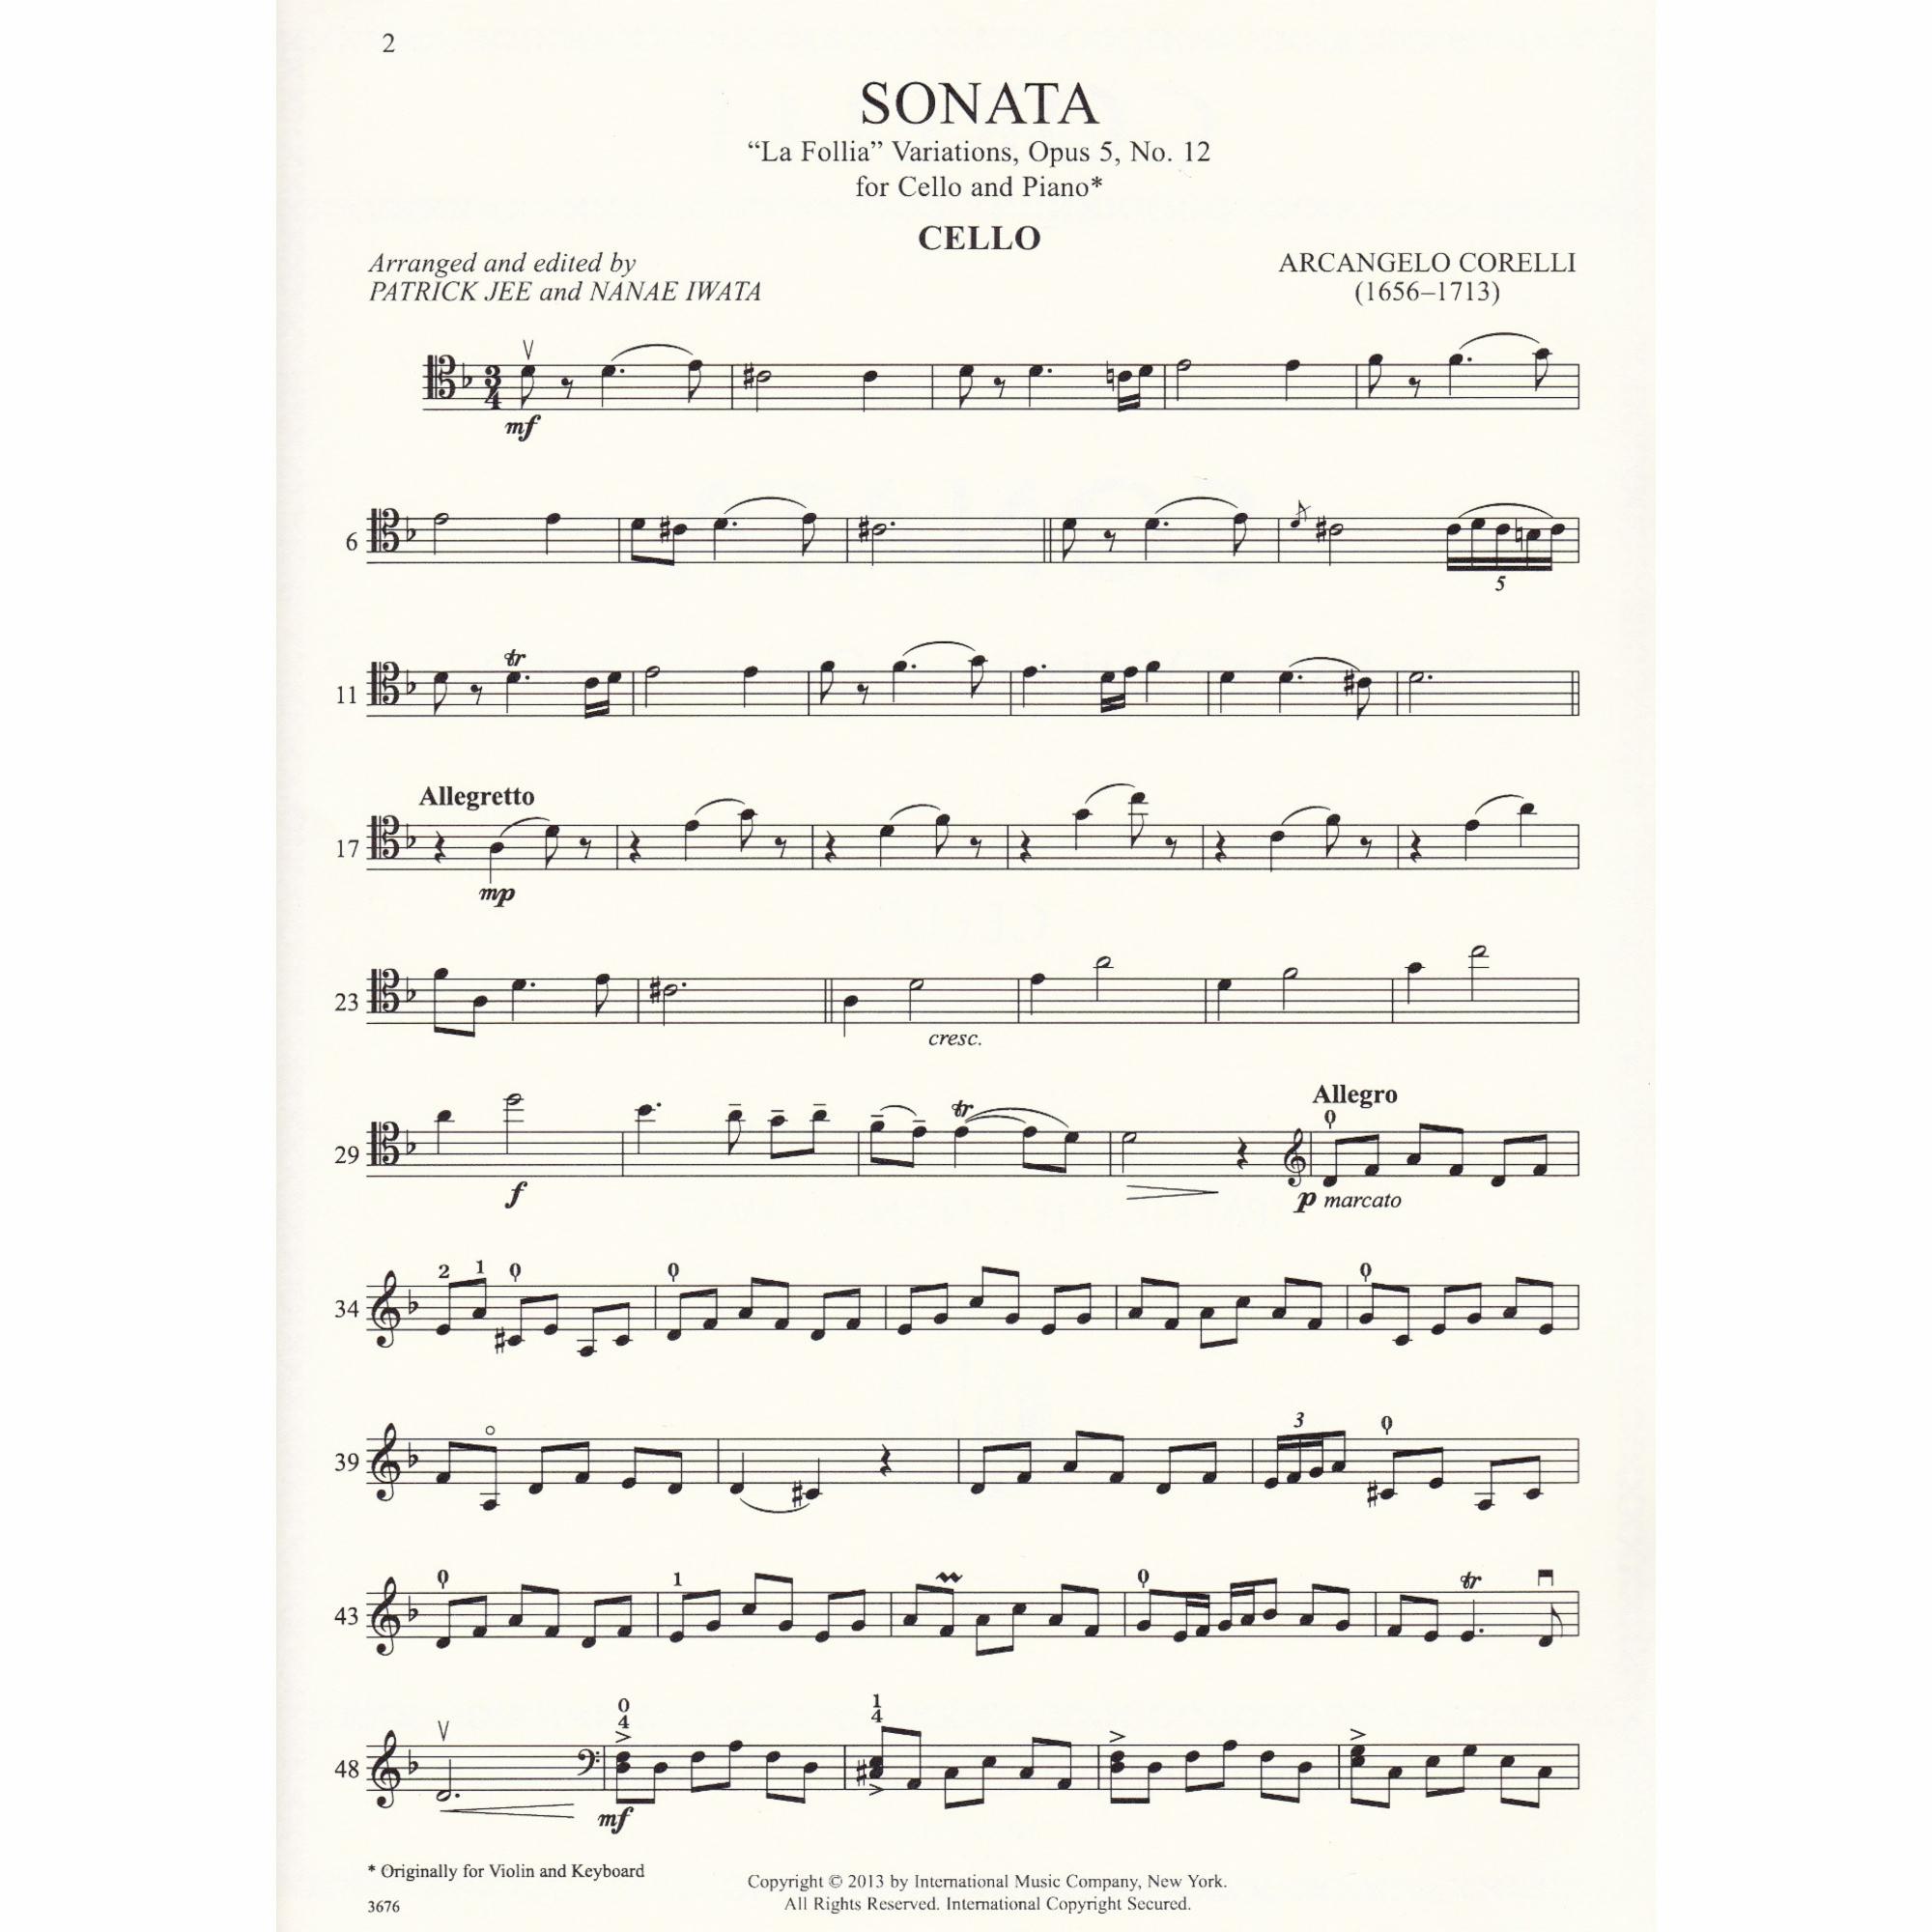 La Folia Variations for Cello and Piano, Op. 5, No. 12